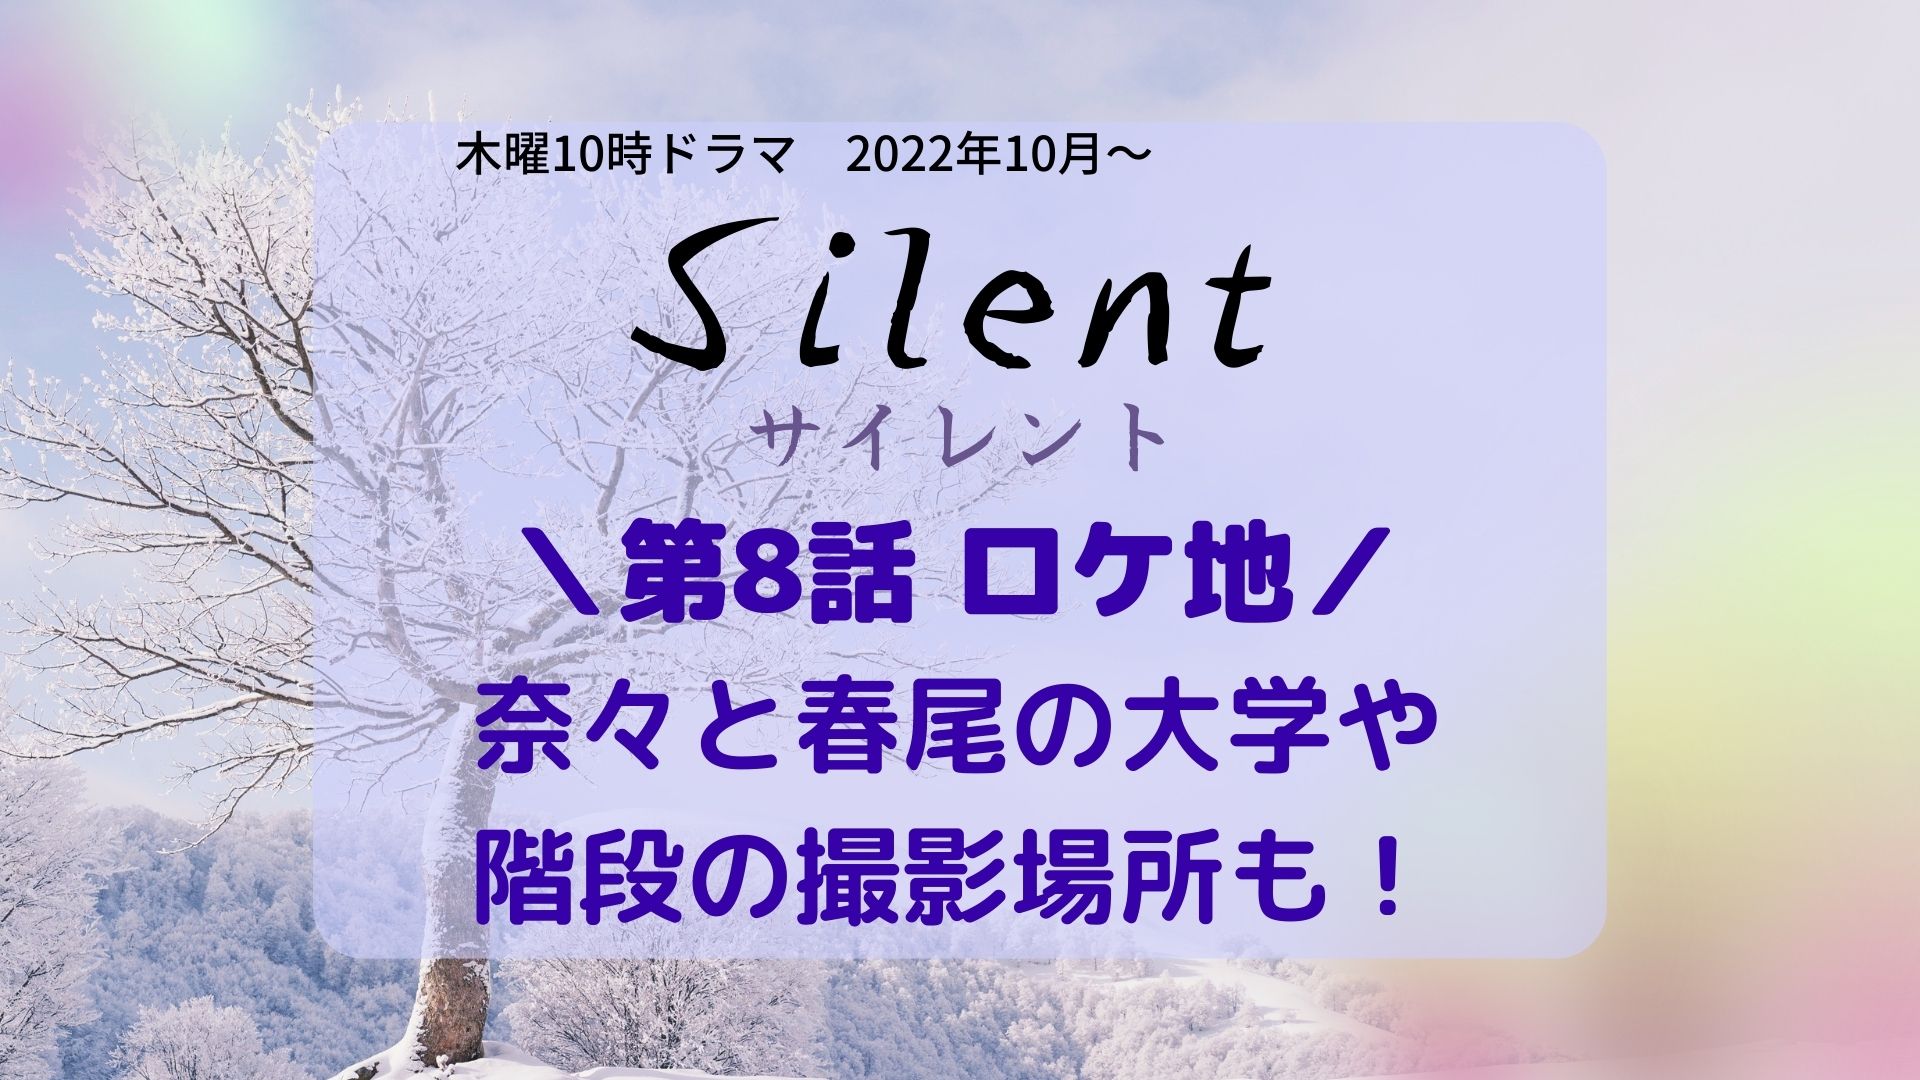 Silent (サイレント)8話ロケ地